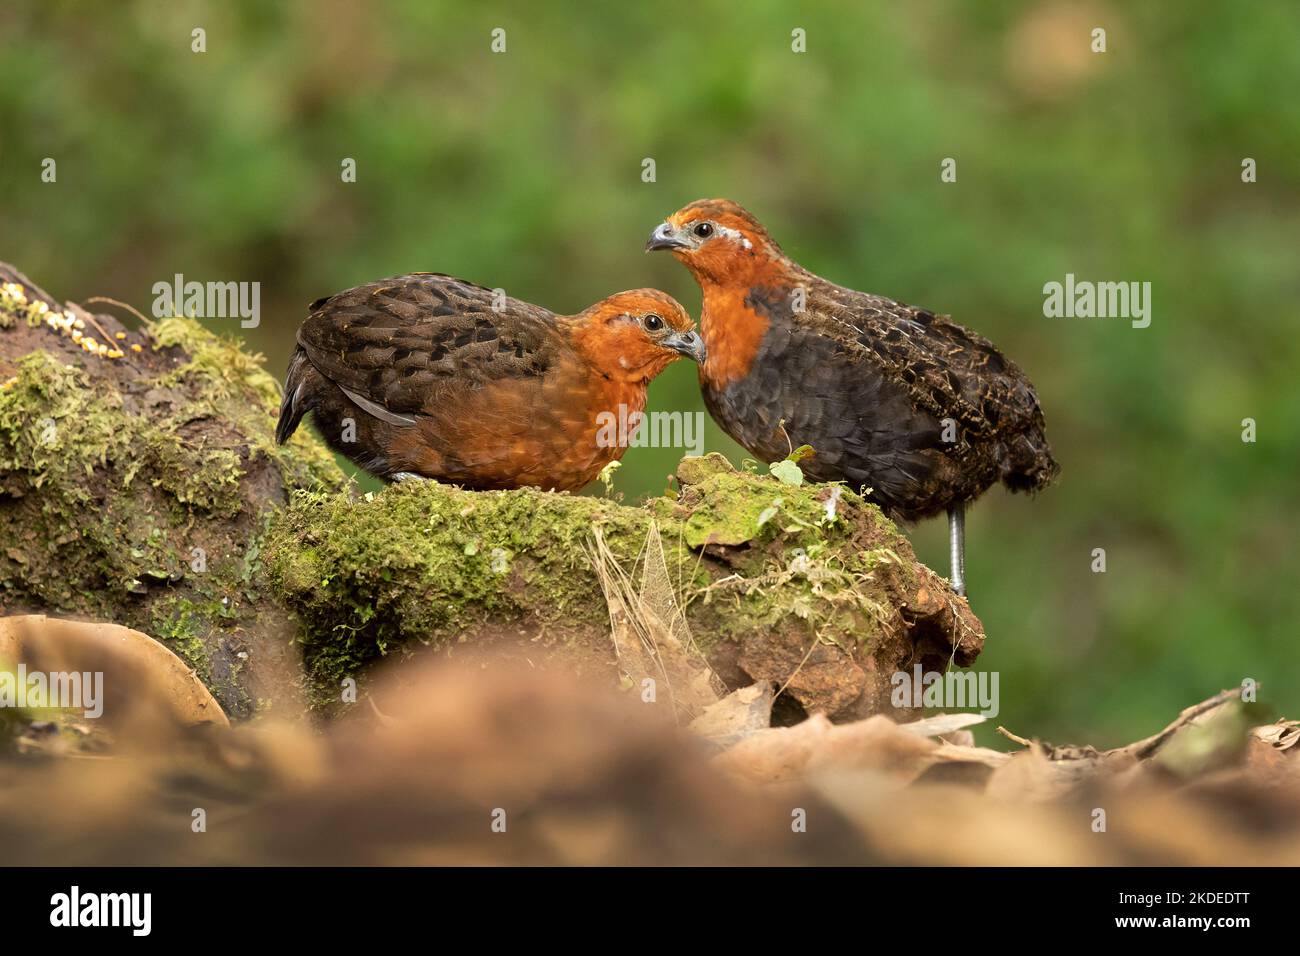 Chestnut wood quail Stock Photo